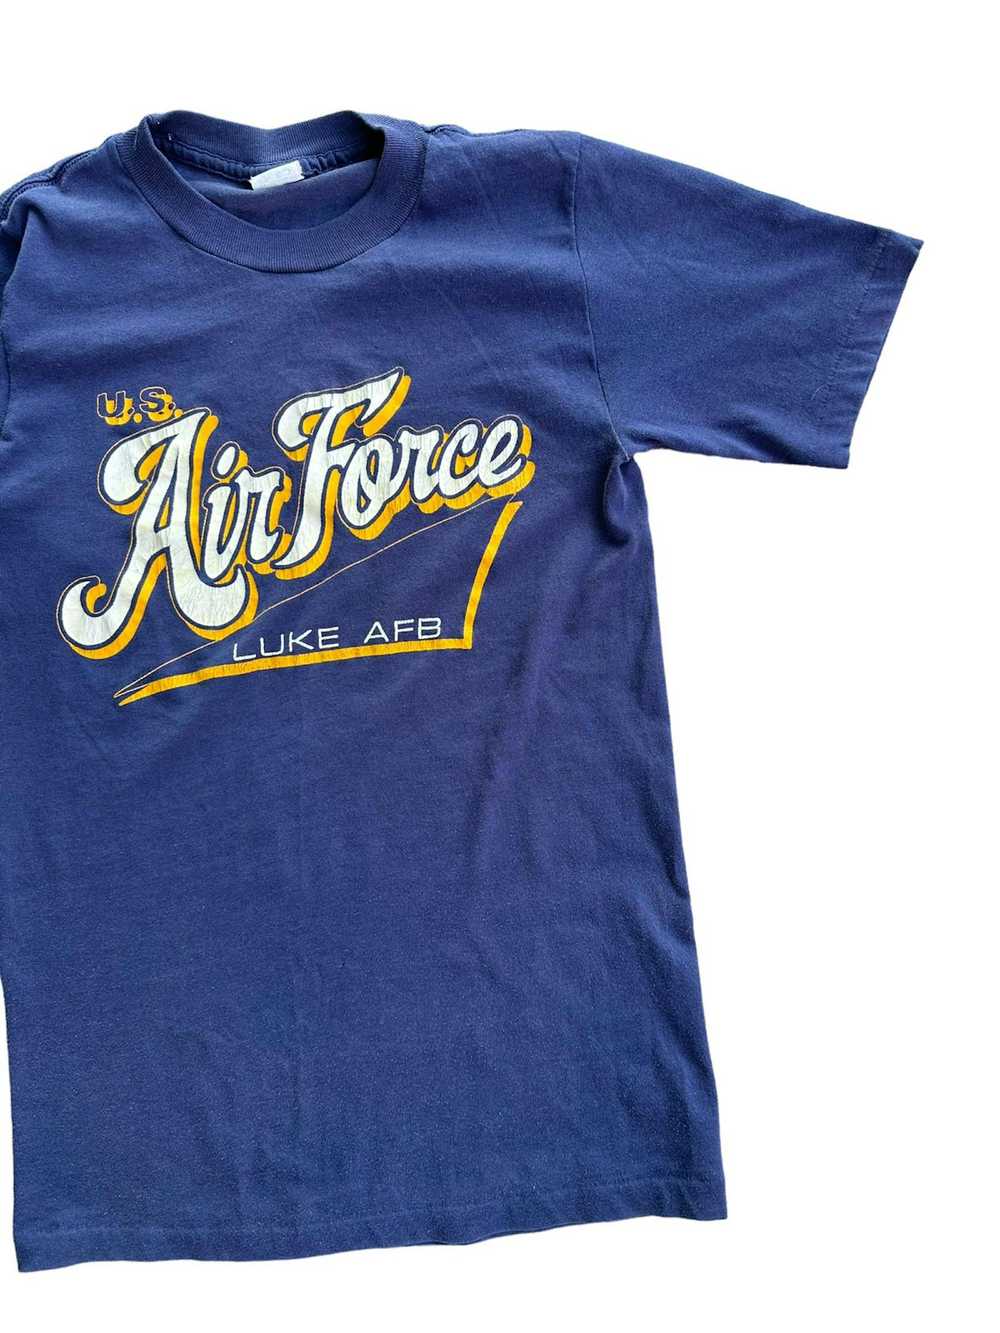 Vintage Vintage 80’s US Air Force T-Shirt - image 2